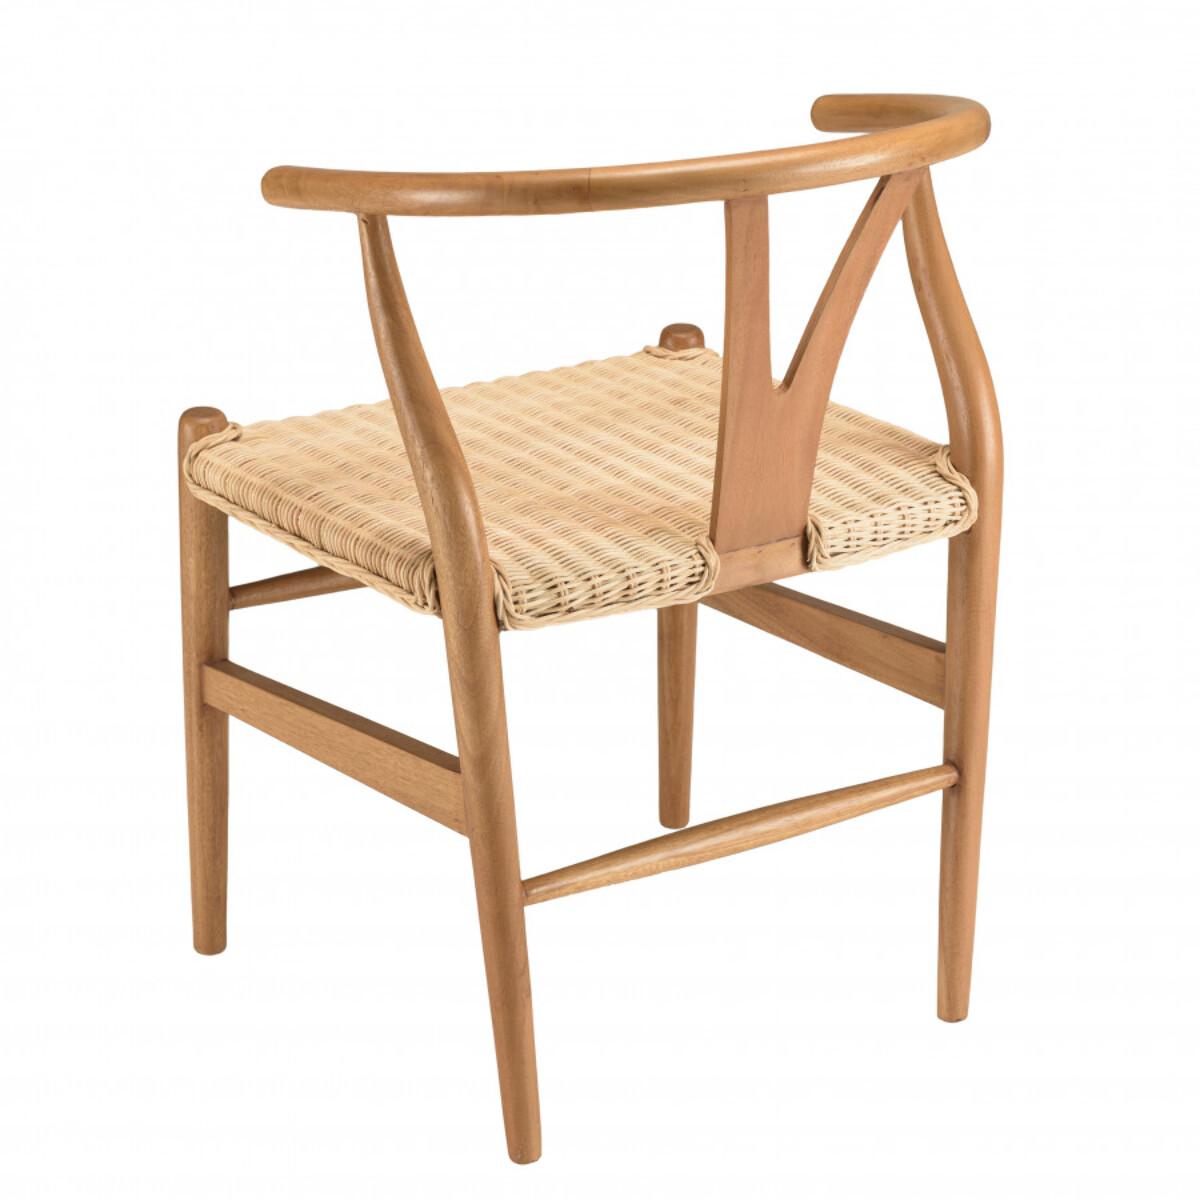 WILL - Chaise en bois de mahogany, dossier arrondi et assise en rotin